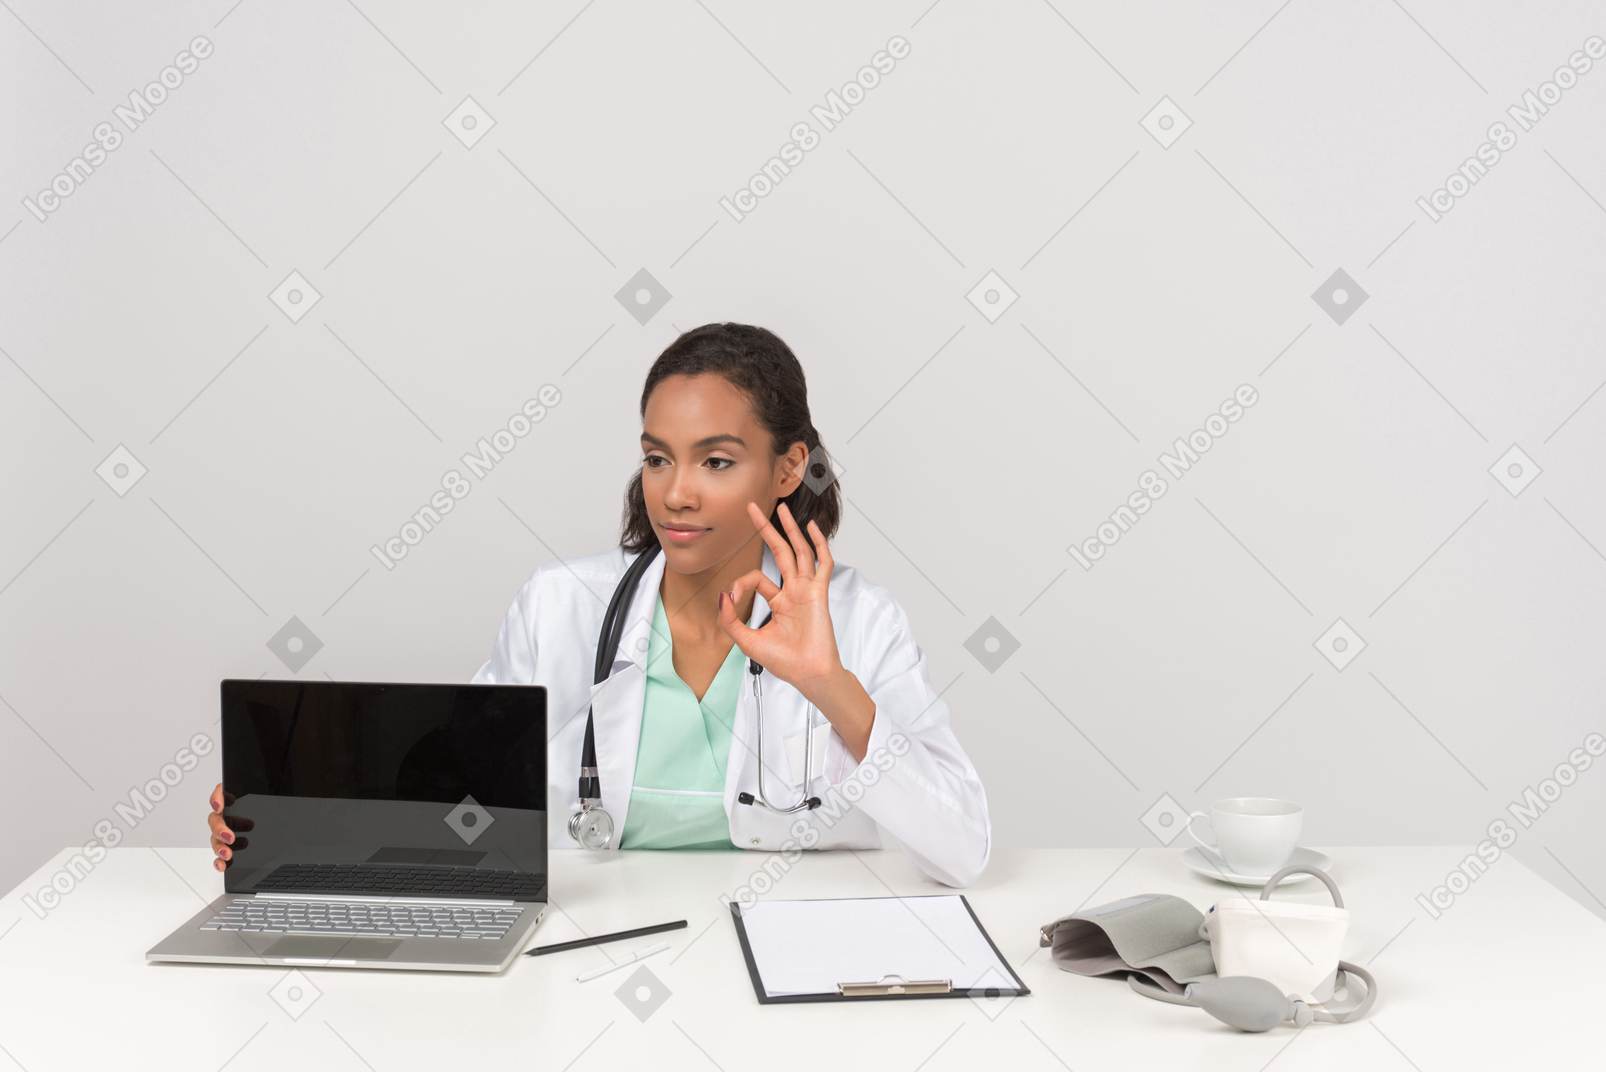 Female doctor showing ok gesture